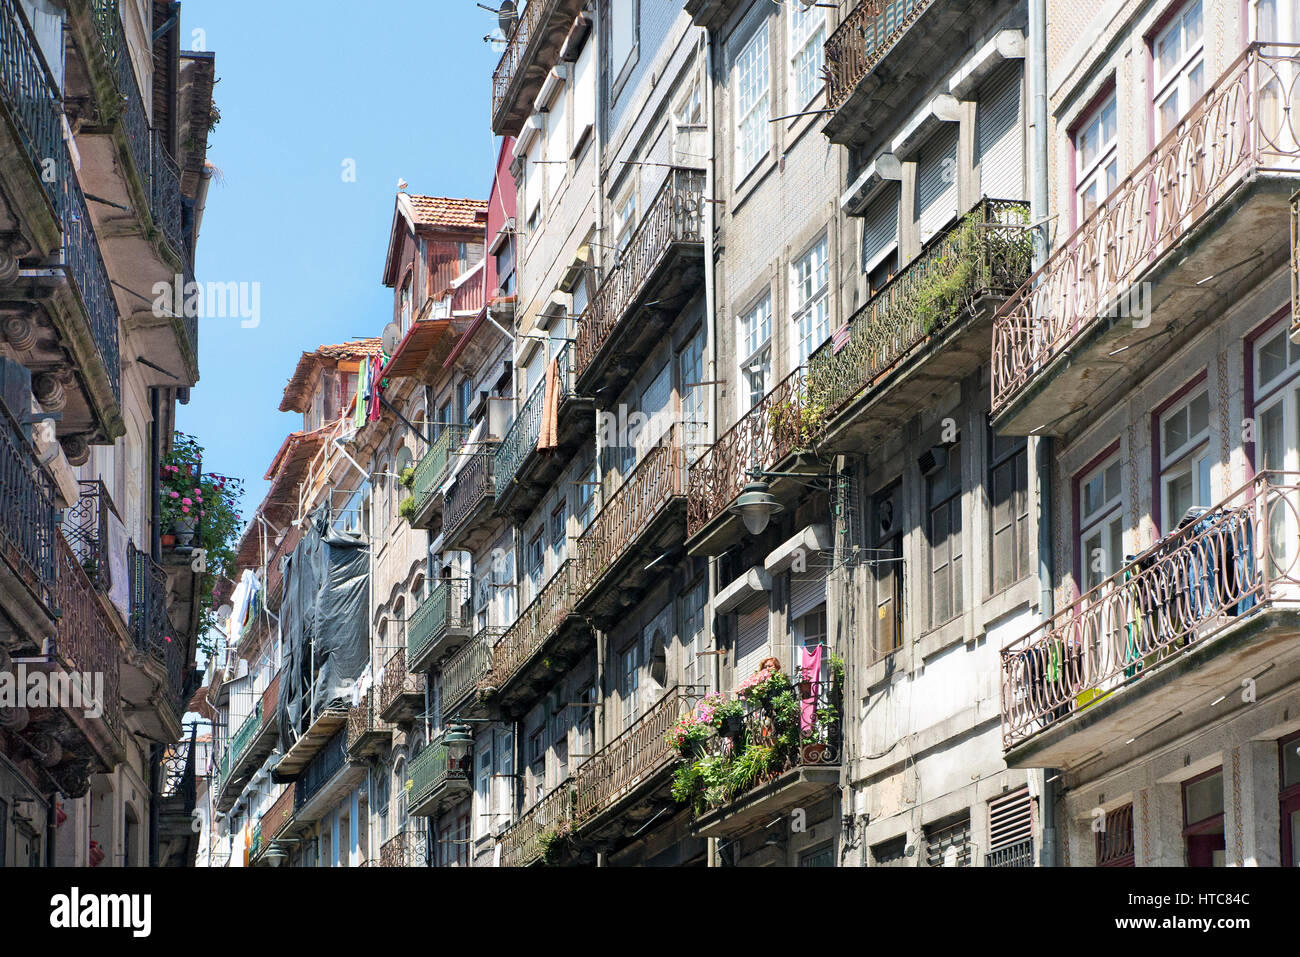 Street scen efrom Ribeira Porto Portugal Stock Photo